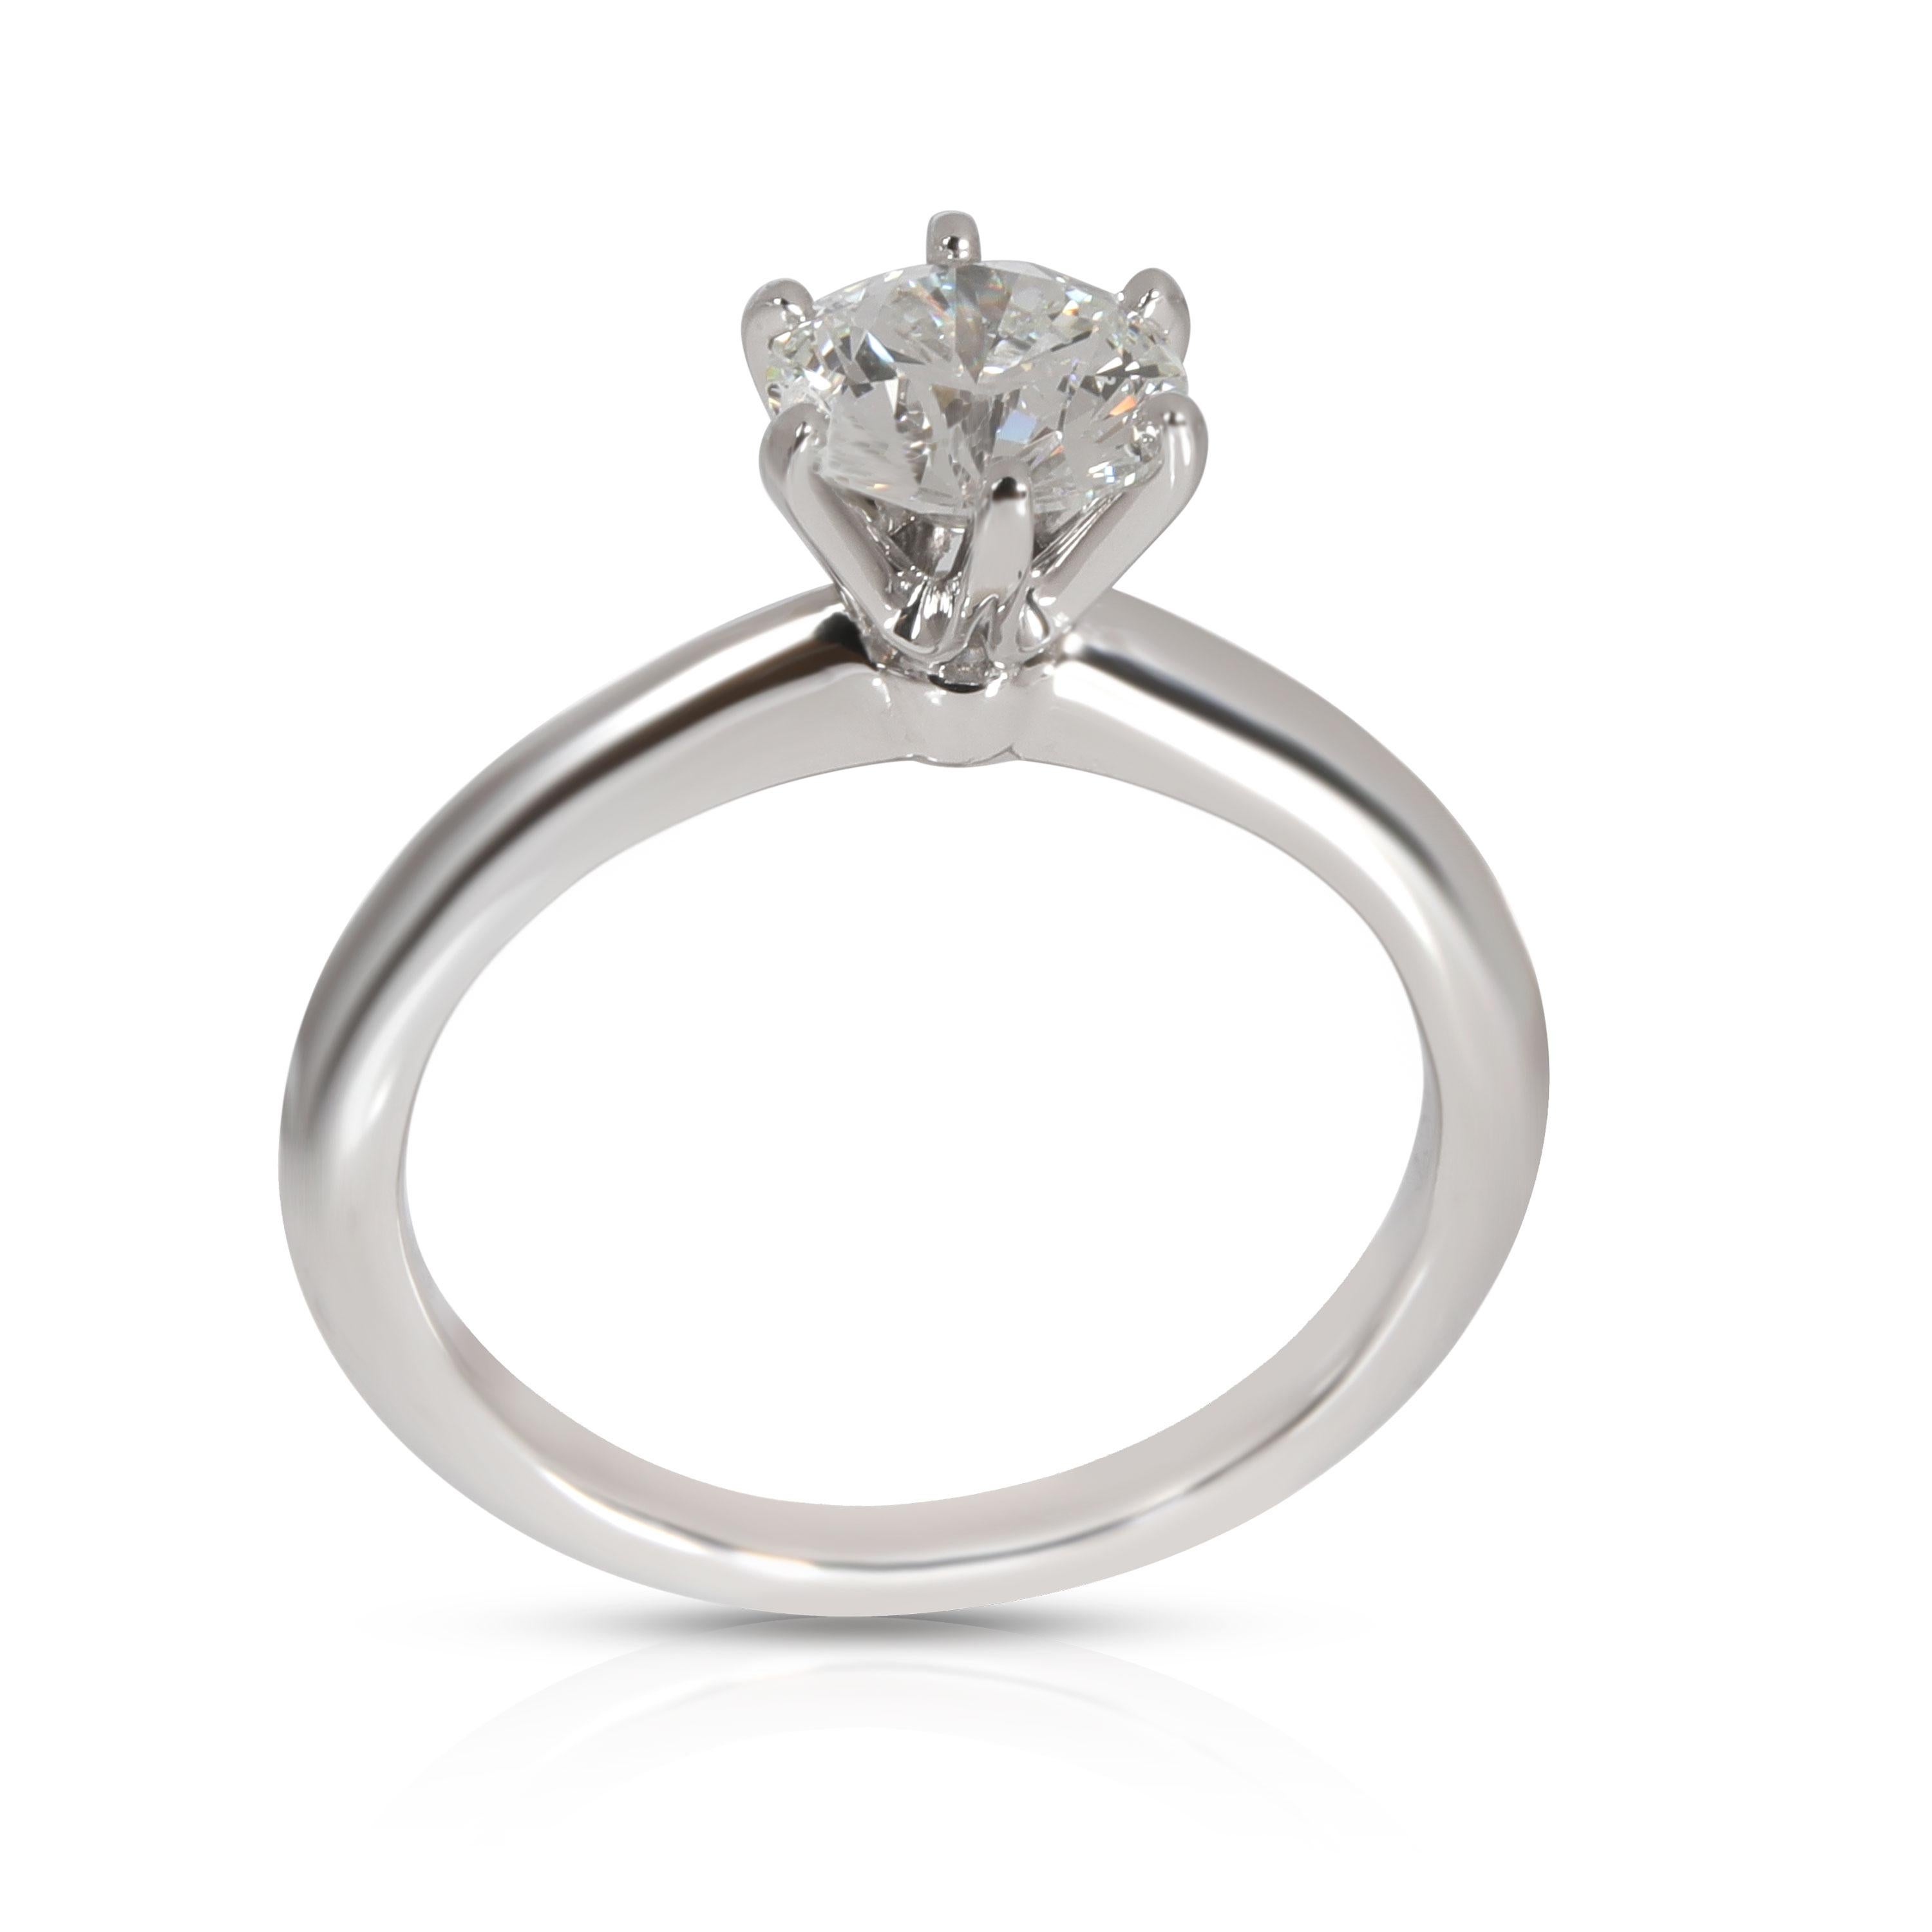 Round Cut Tiffany & Co. Solitaire Diamond Engagement Ring in Platinum 'G VS2 1.00 Carat'